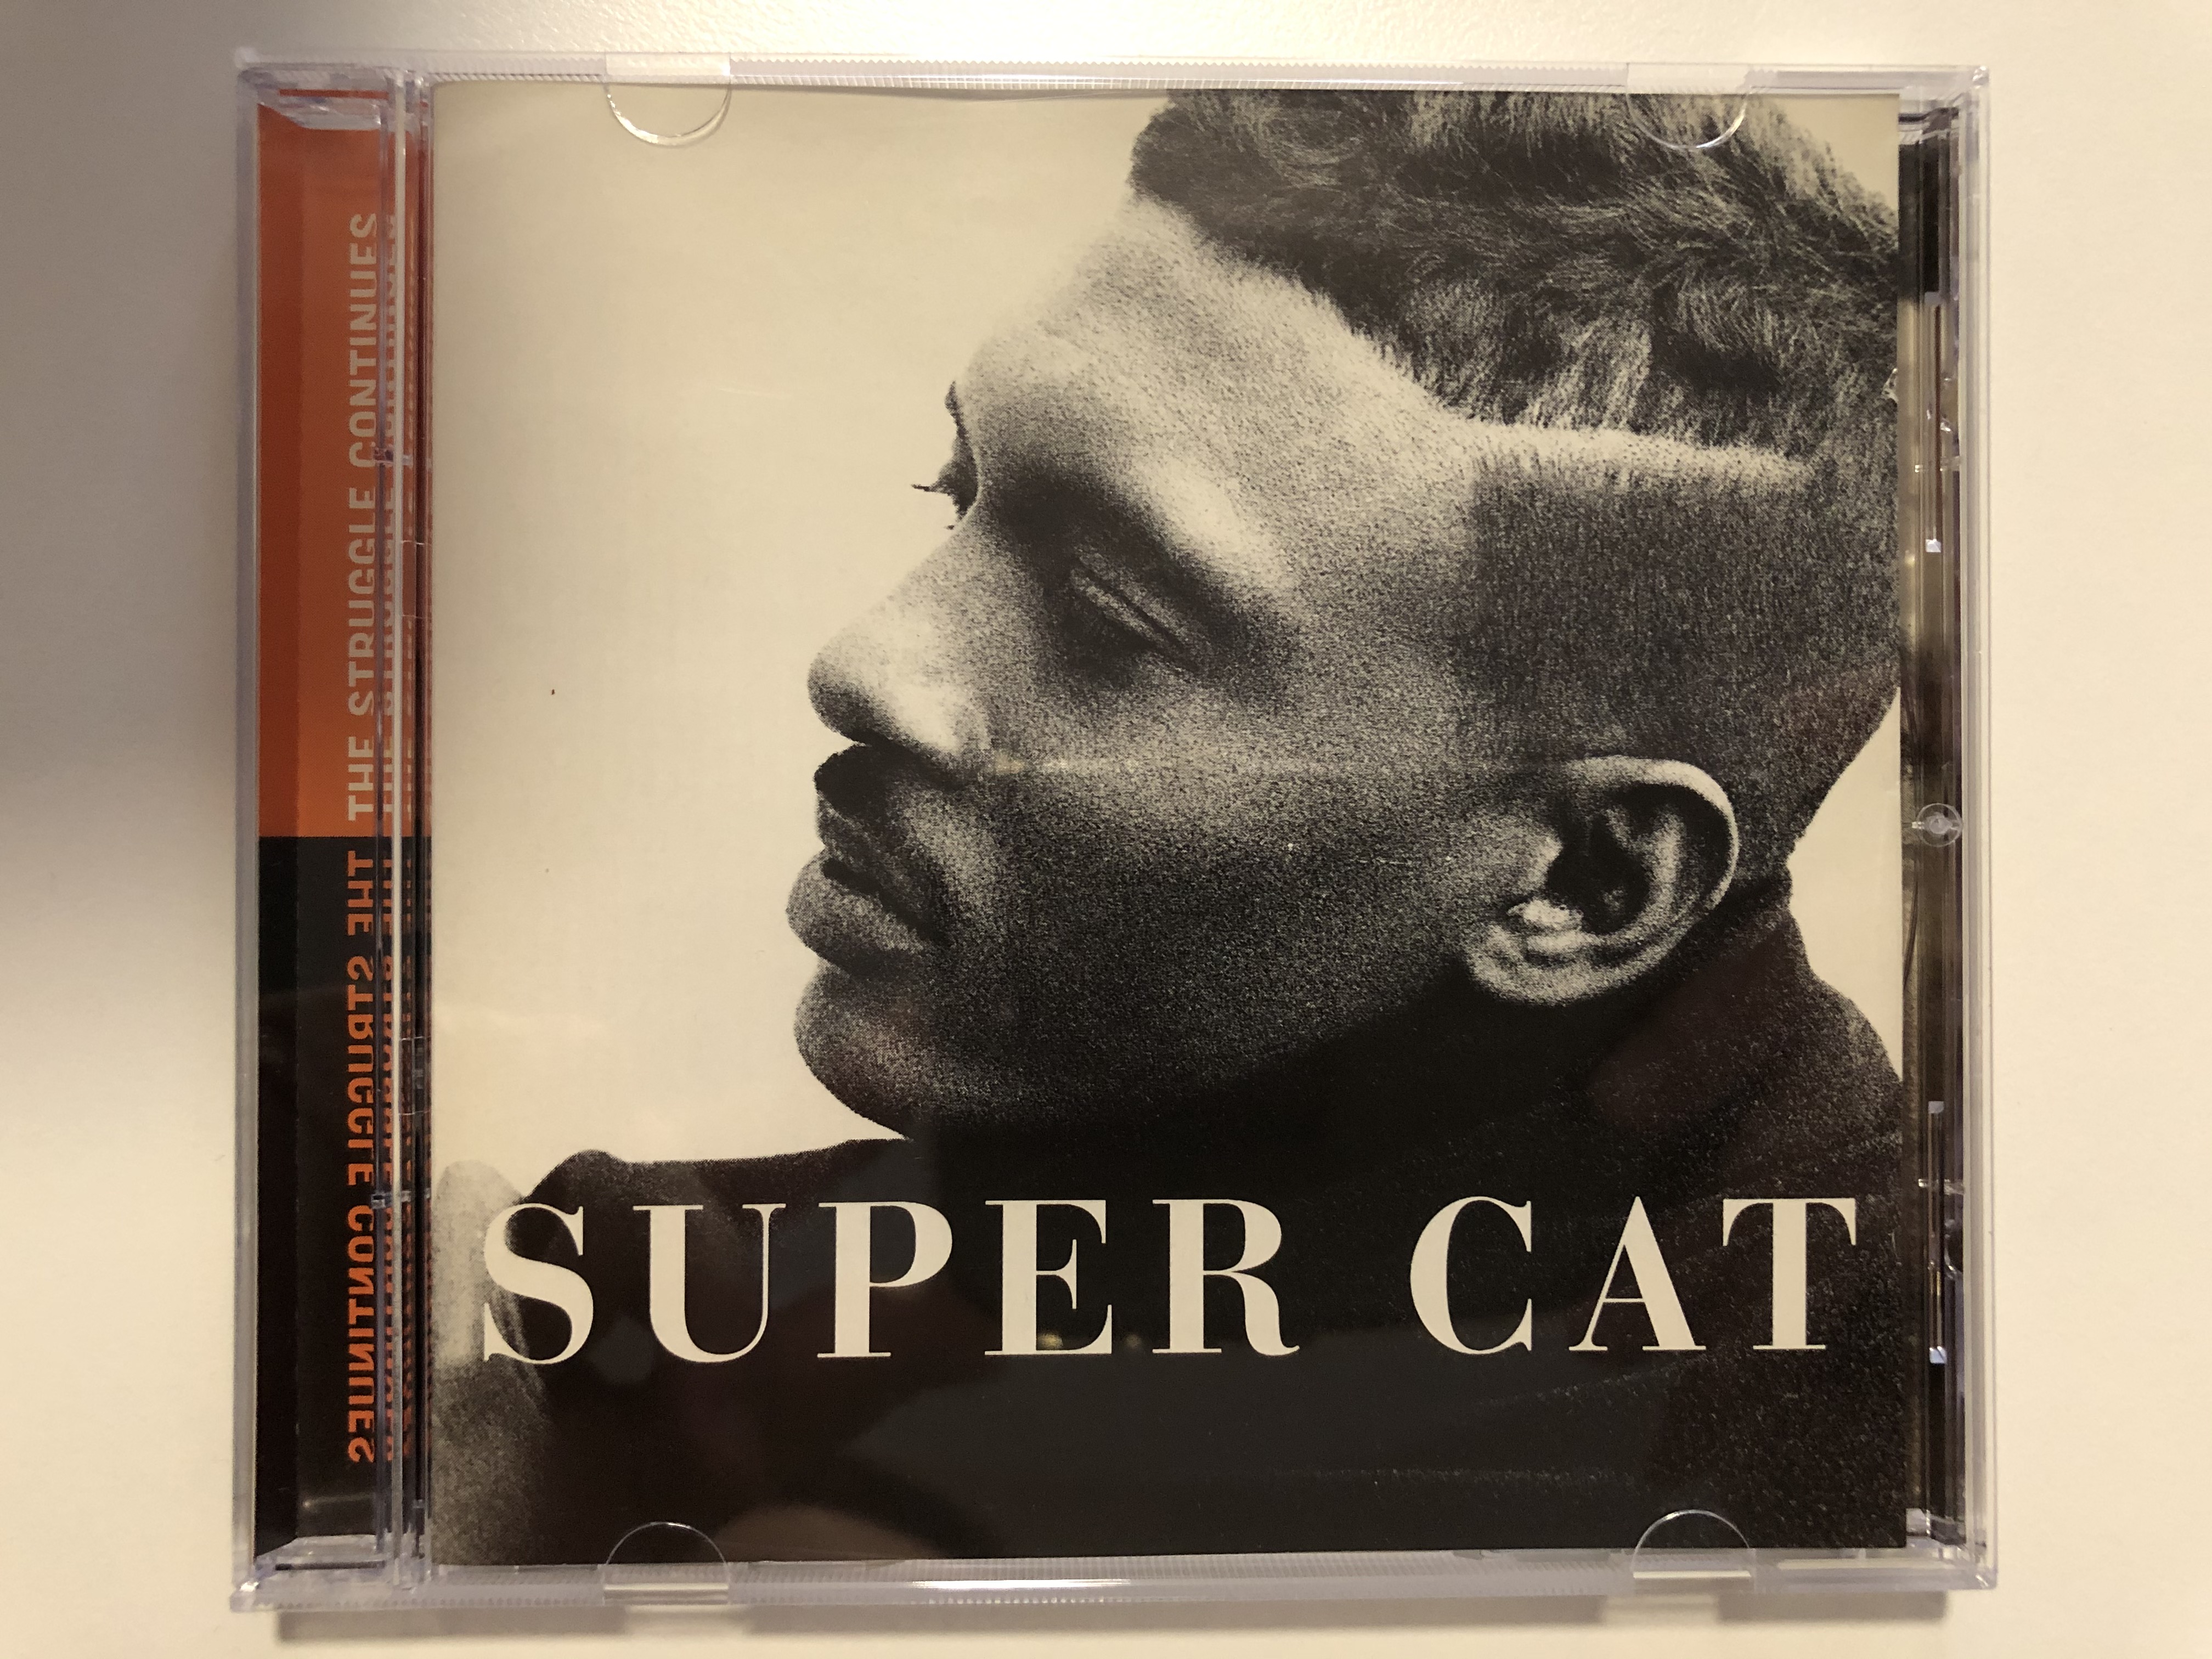 super-cat-the-struggle-continues-columbia-audio-cd-1995-477292-2-1-.jpg